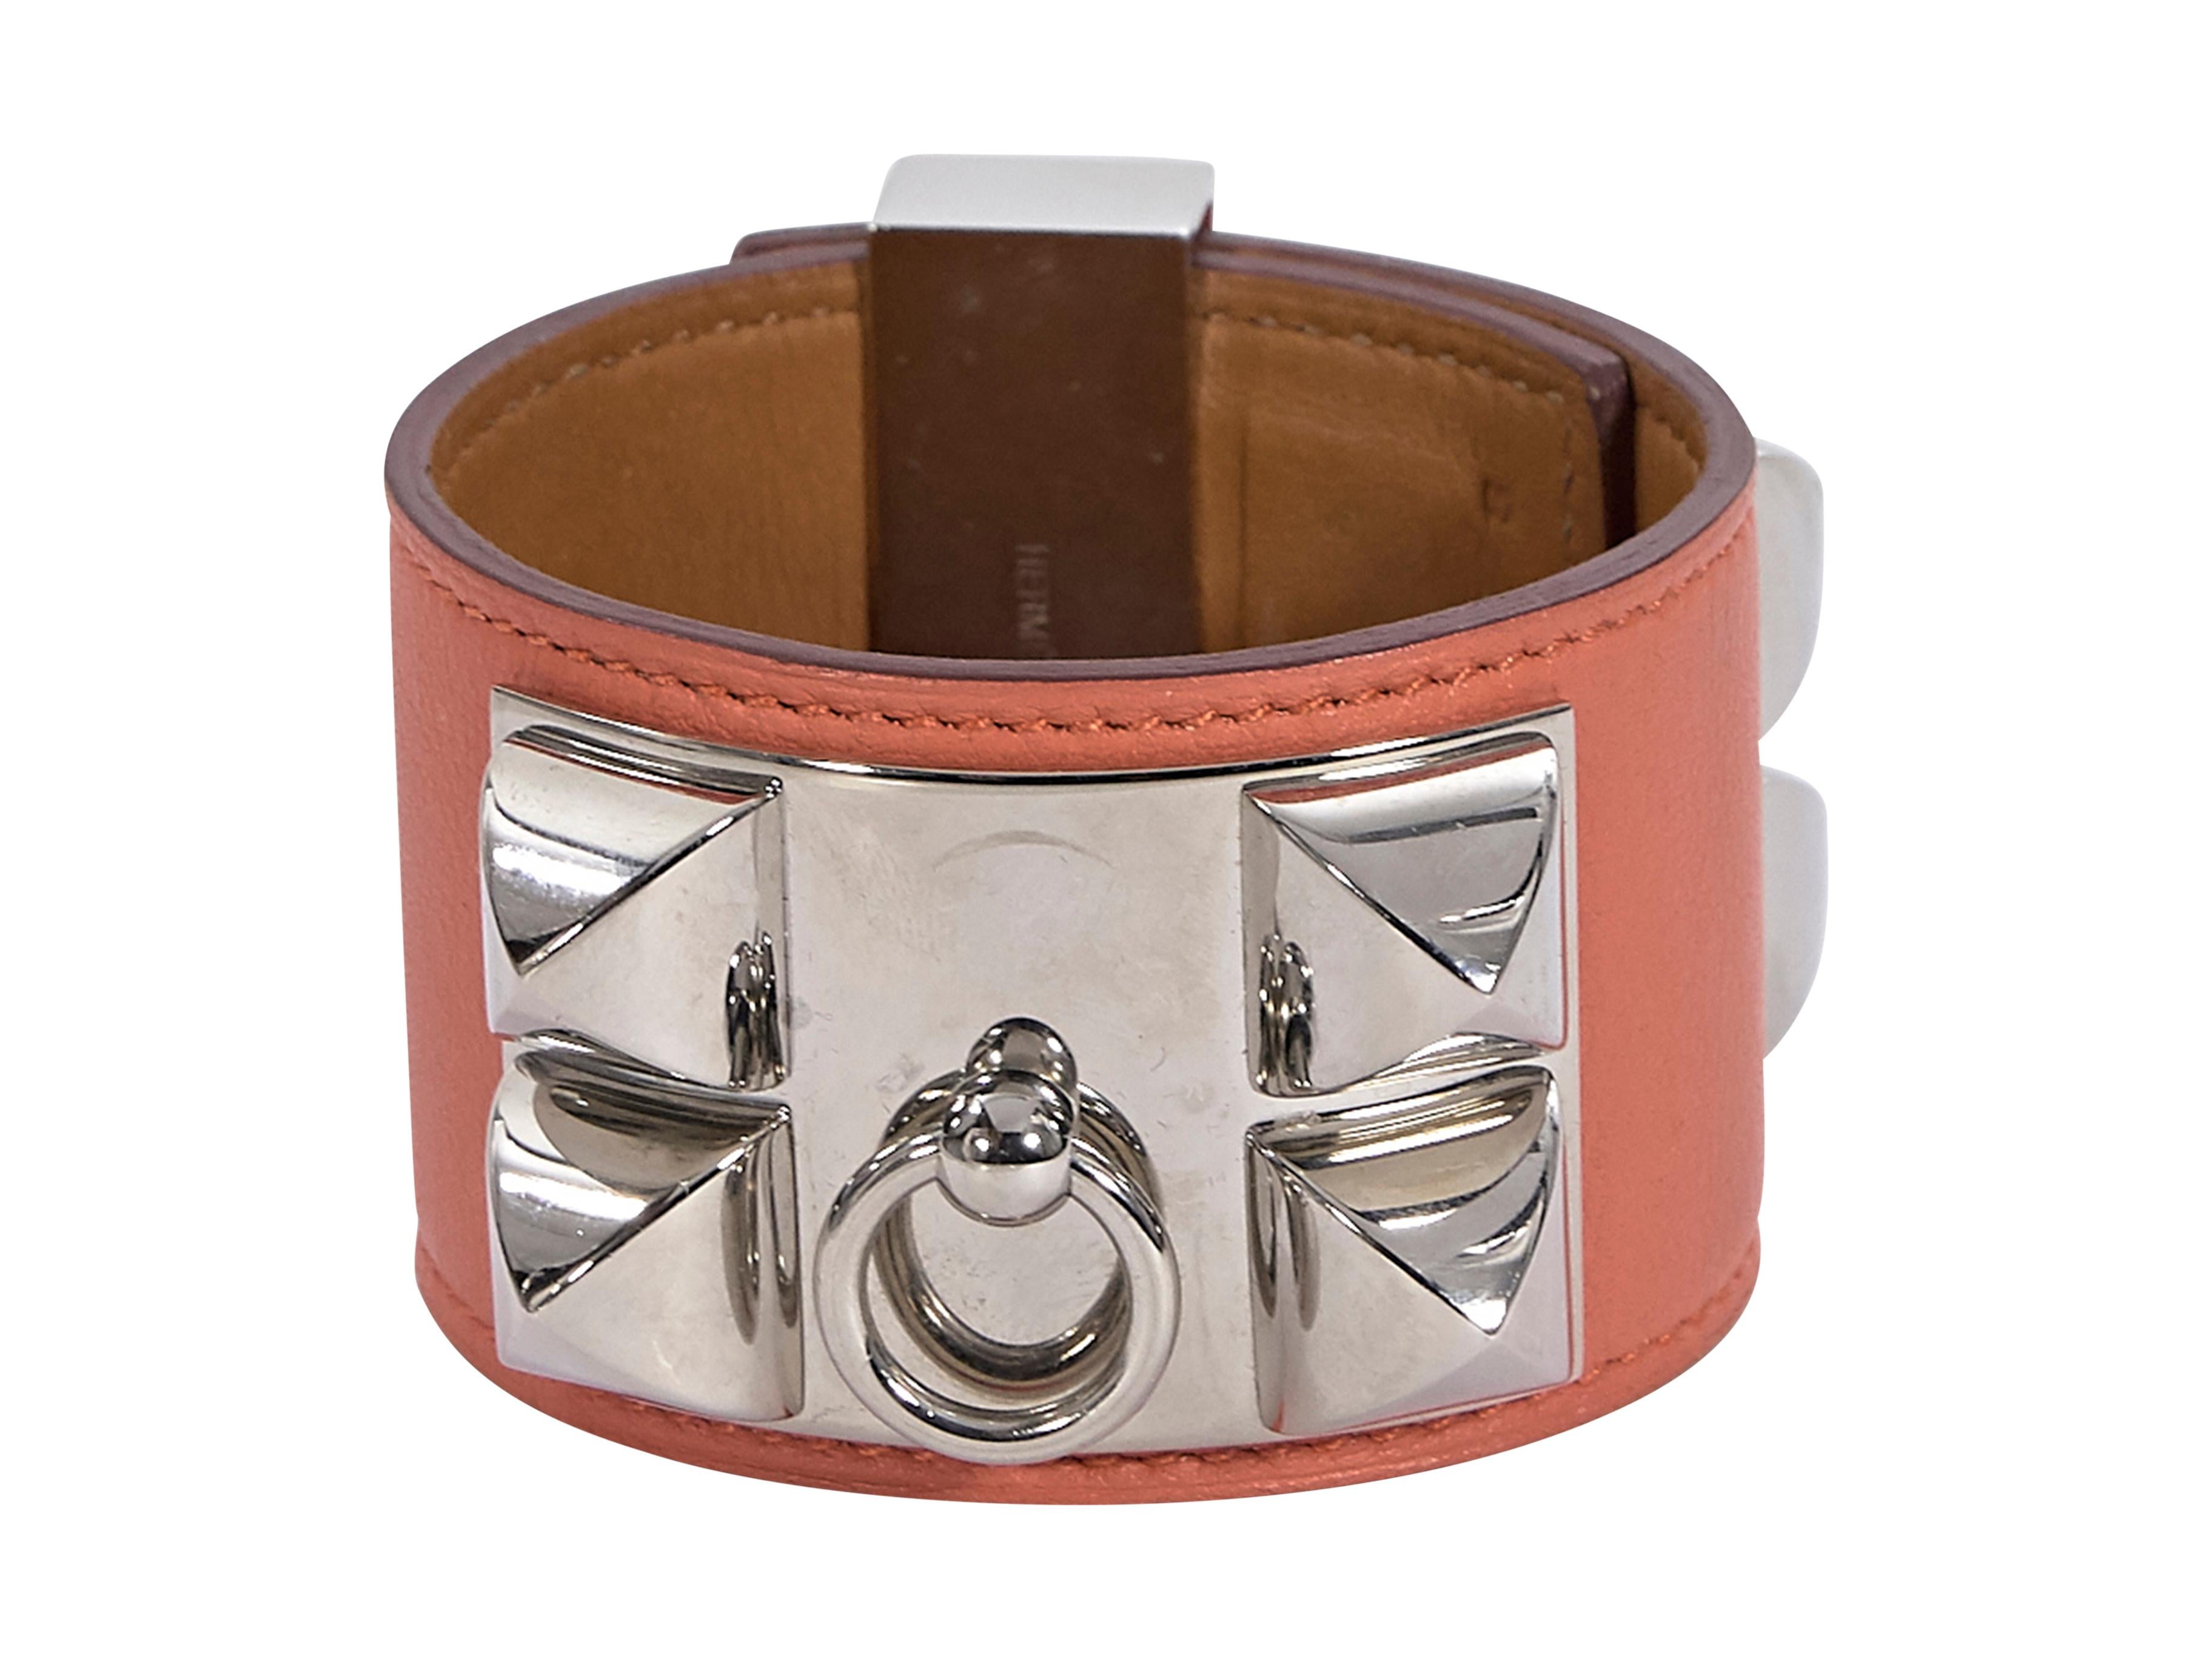 Product details:  Orange leather Collier de Chien bracelet by Hermes.  Twist-lock closure.  Slivertone hardware.  8.25